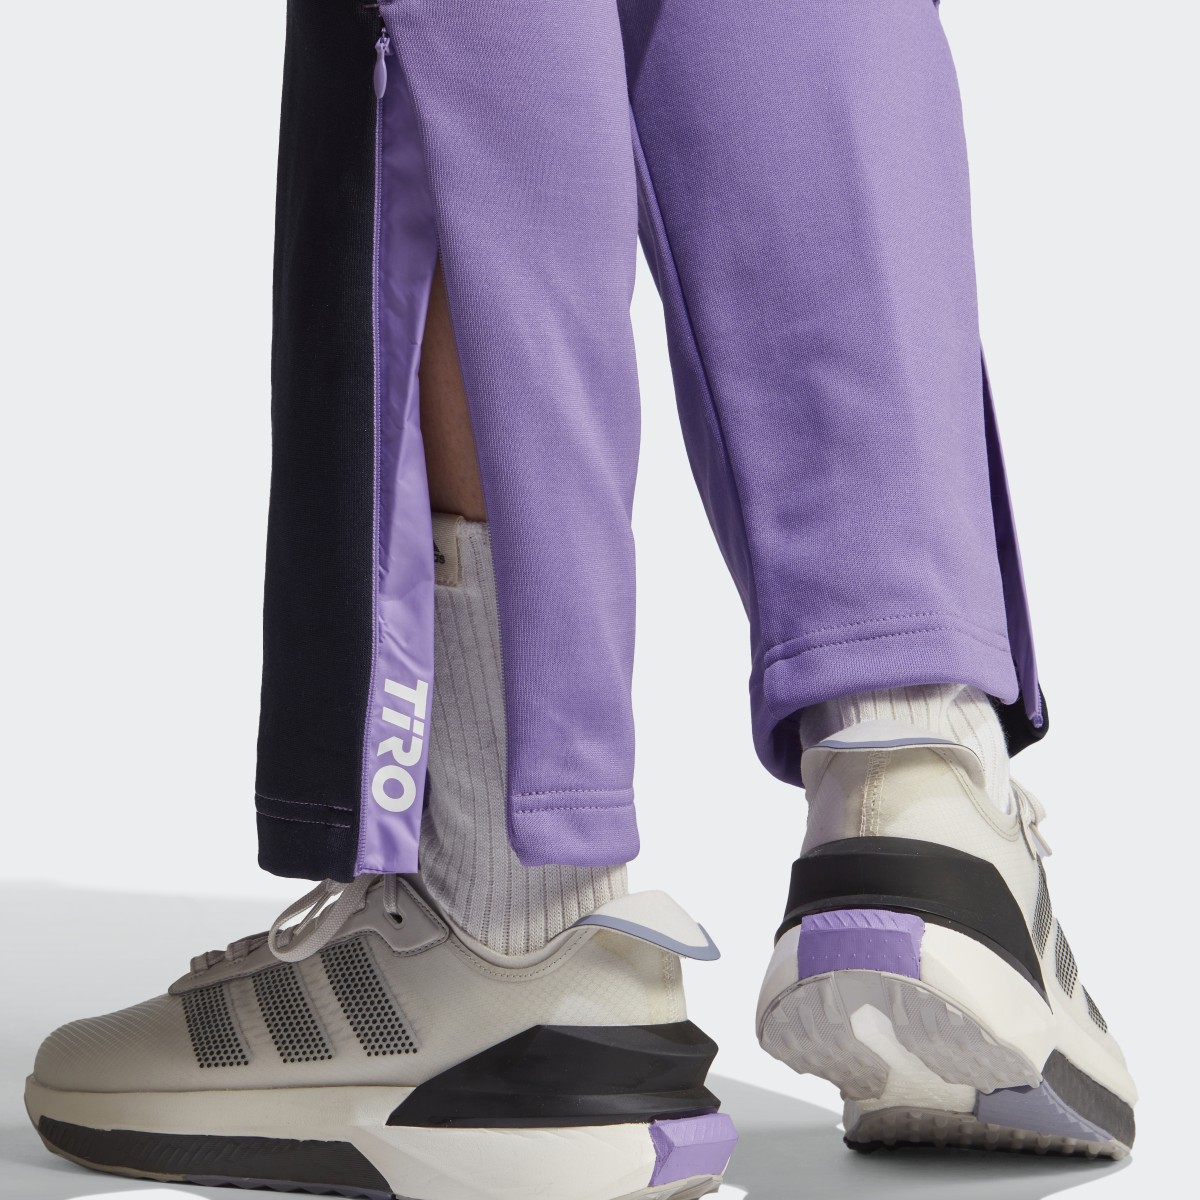 Adidas Pants Deportivos Tiro Suit-Up Advanced. 7